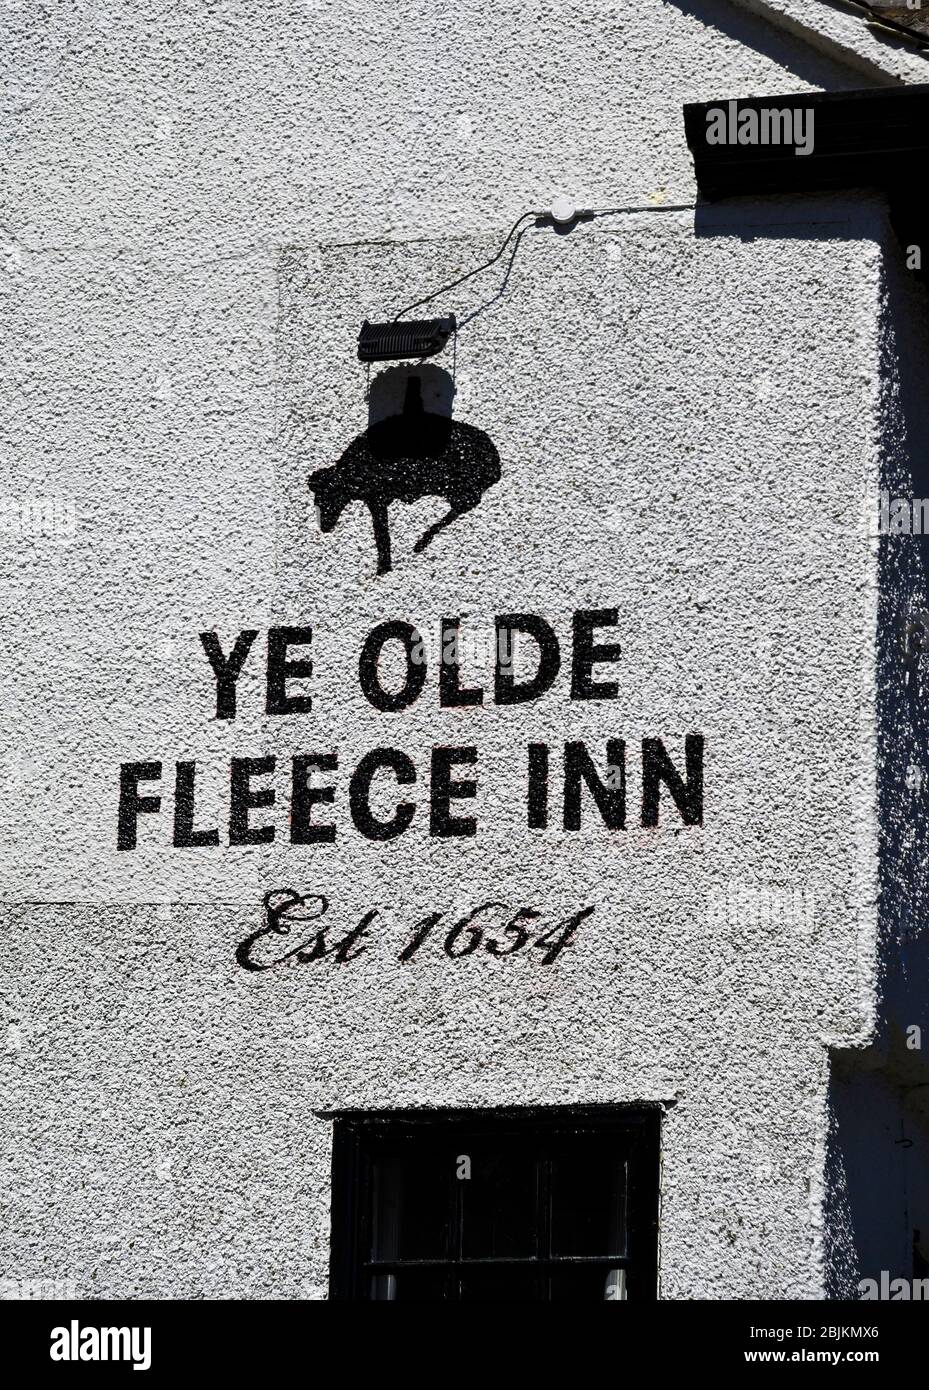 Inn sign. Ye Olde Fleece Inn, Est 1654. Highgate, Kendal, Cumbria, England, United Kingdom, Europe. Stock Photo